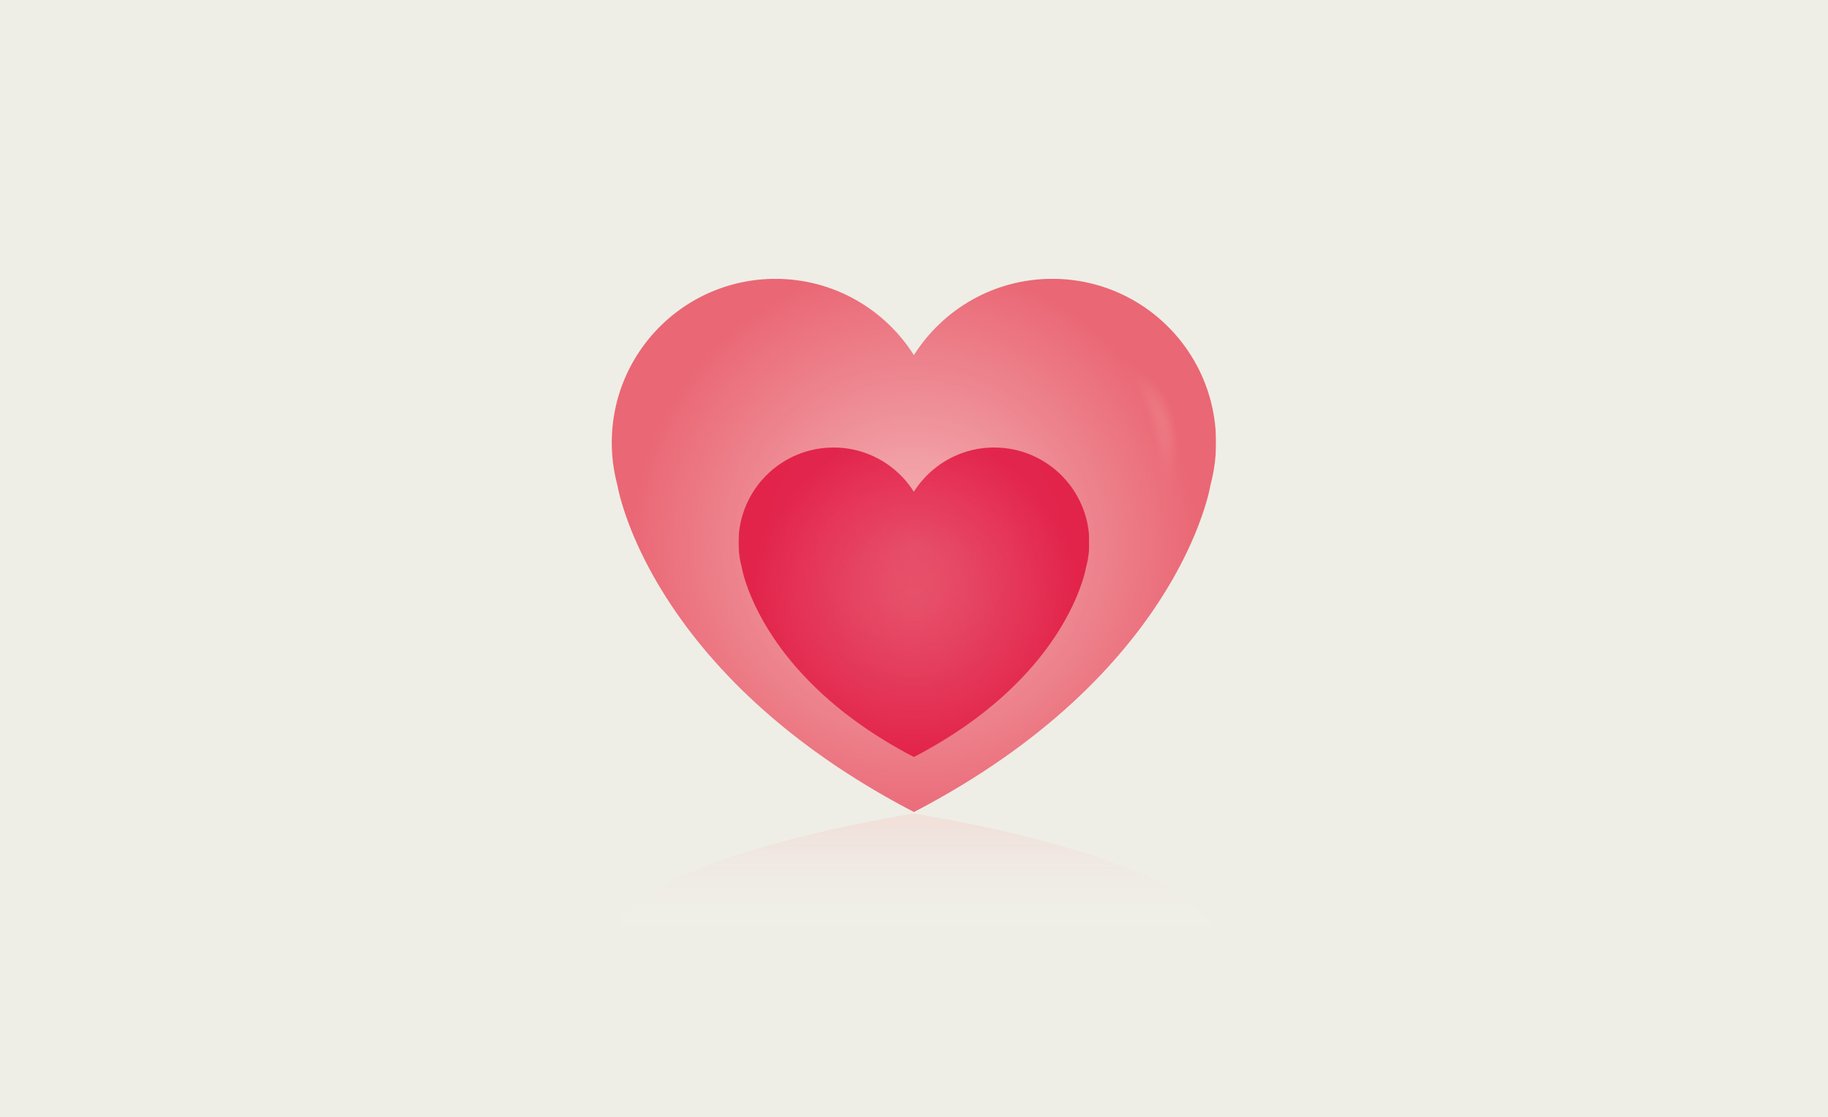 Capricare double heart icon illustration